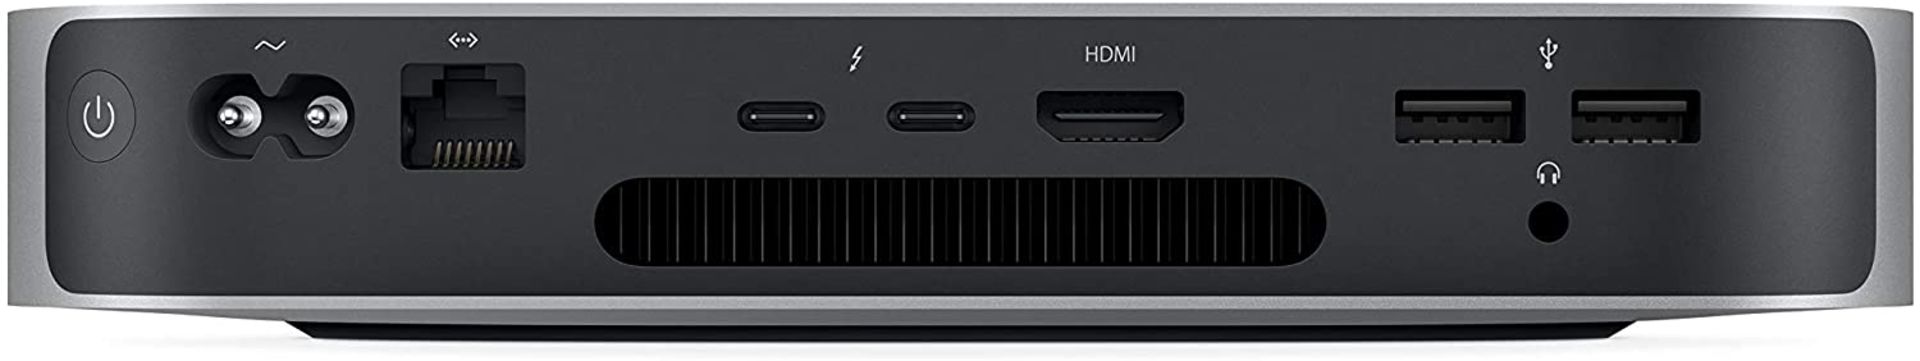 APPLE MAC MINI 2020 M1 8GB 256GB DESKTOP - ALSO INCLUDES APPLE WIRELESS KEYBOARD & MAGIC MOUSE - Image 3 of 4